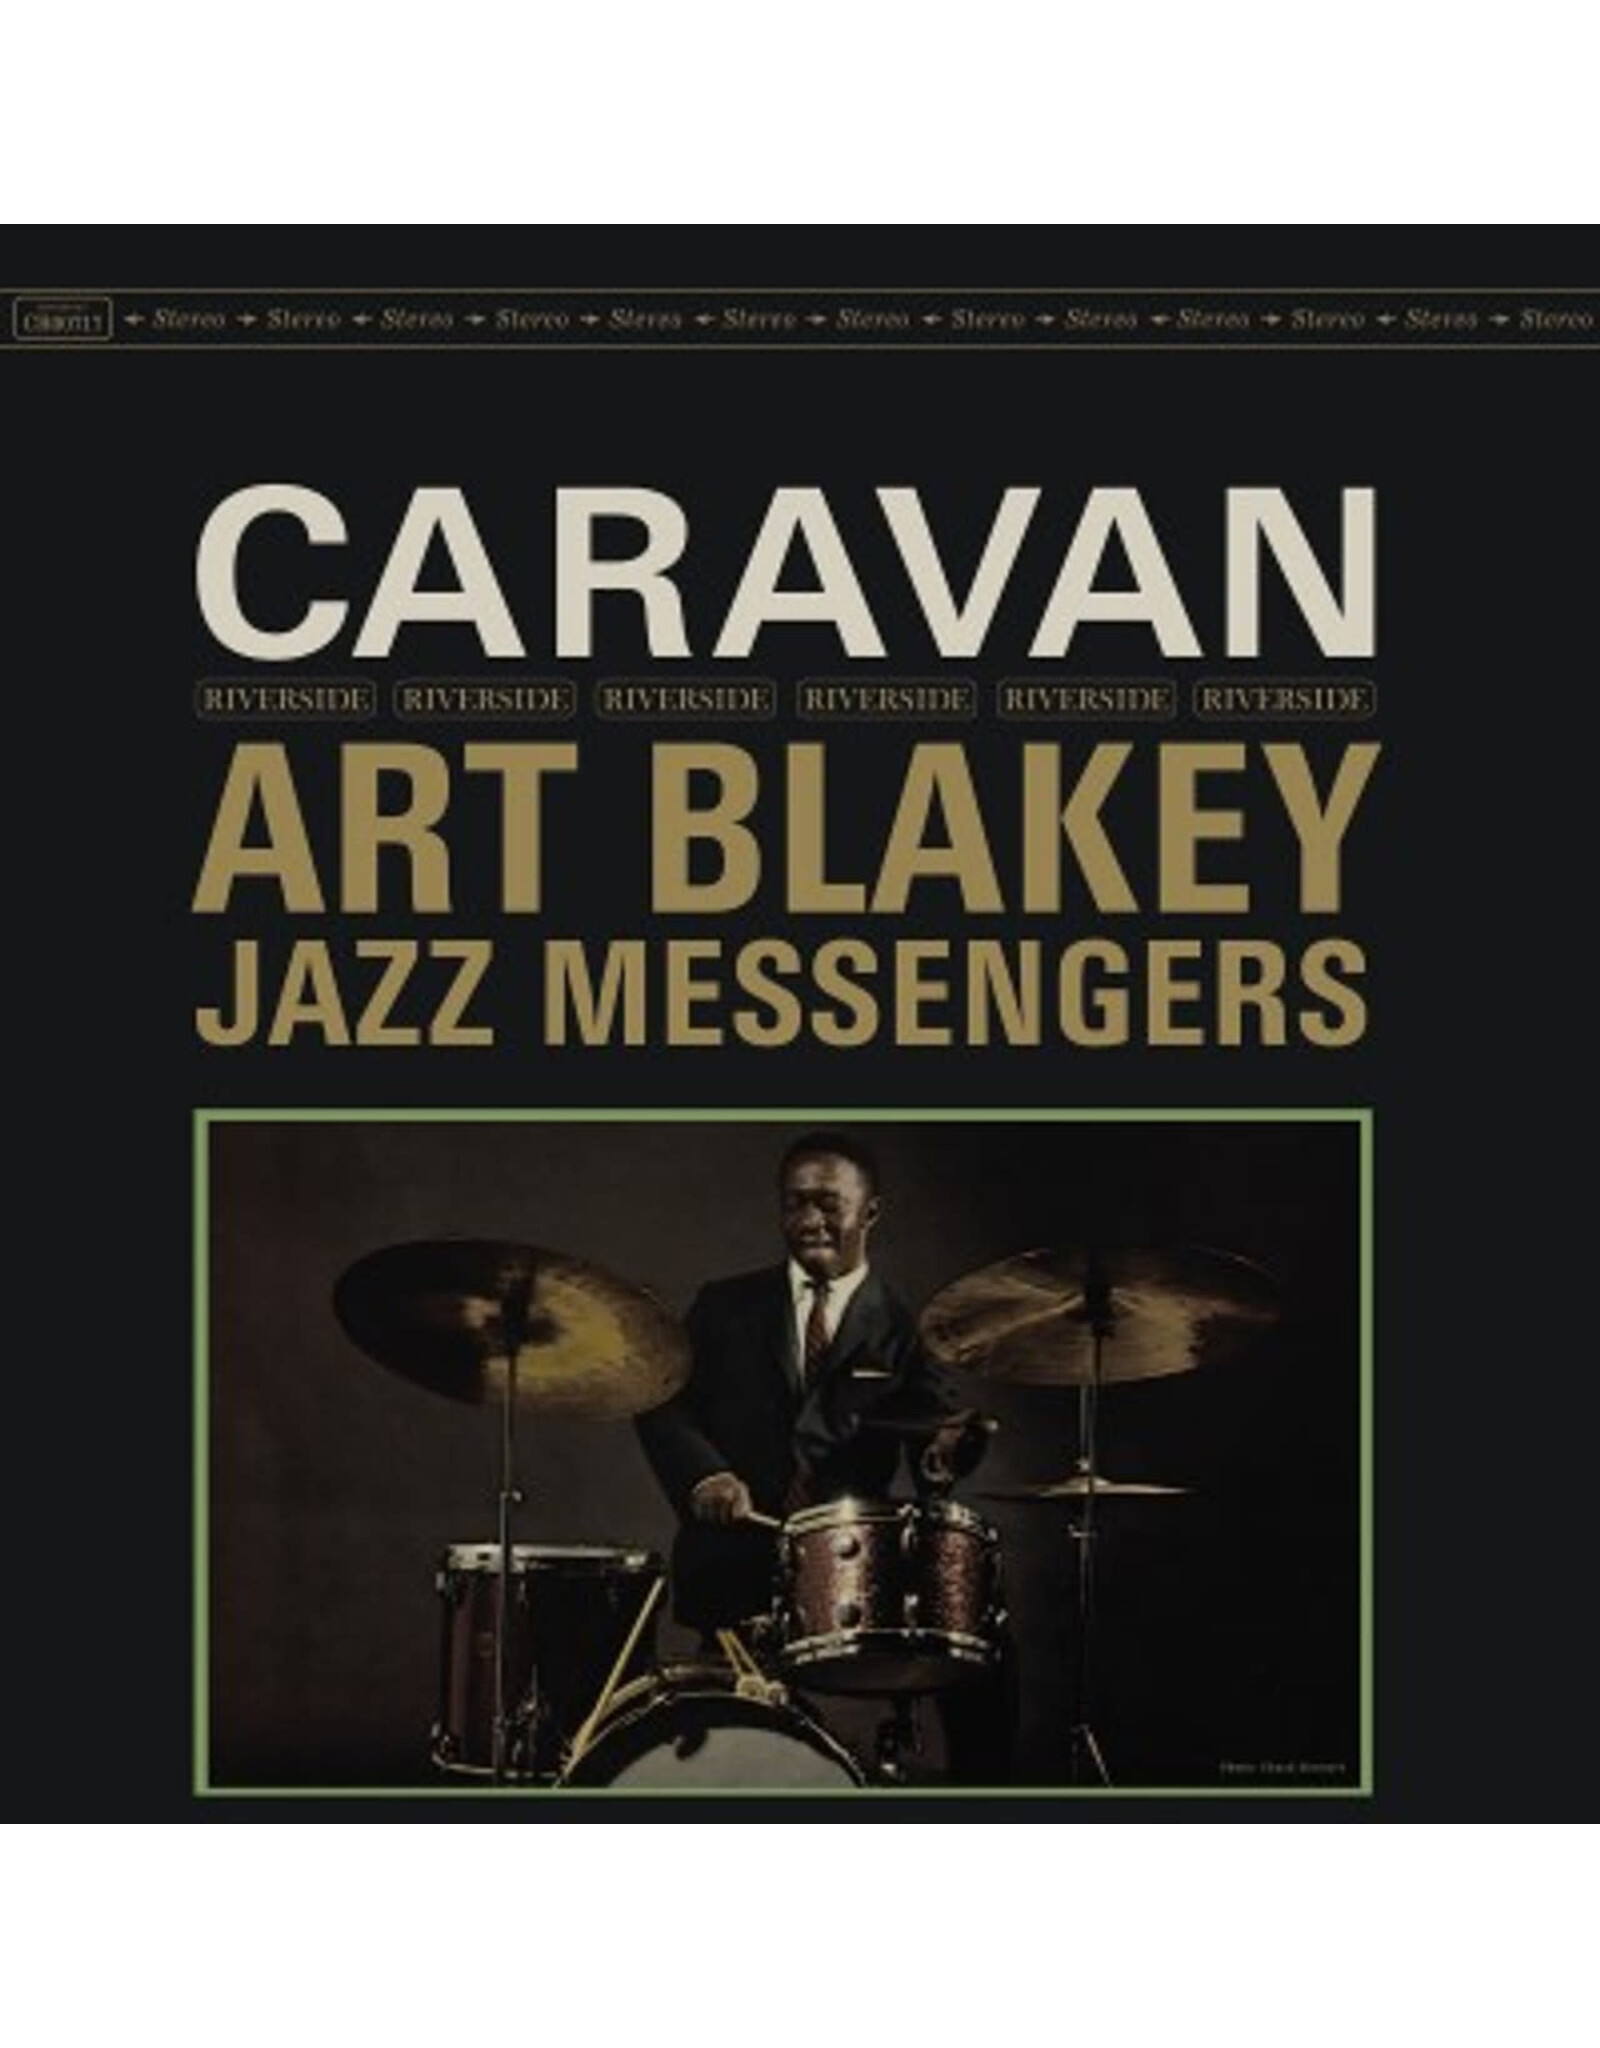 Art Blakey & the Jazz Messengers - Caravan (Original Jazz Classics)